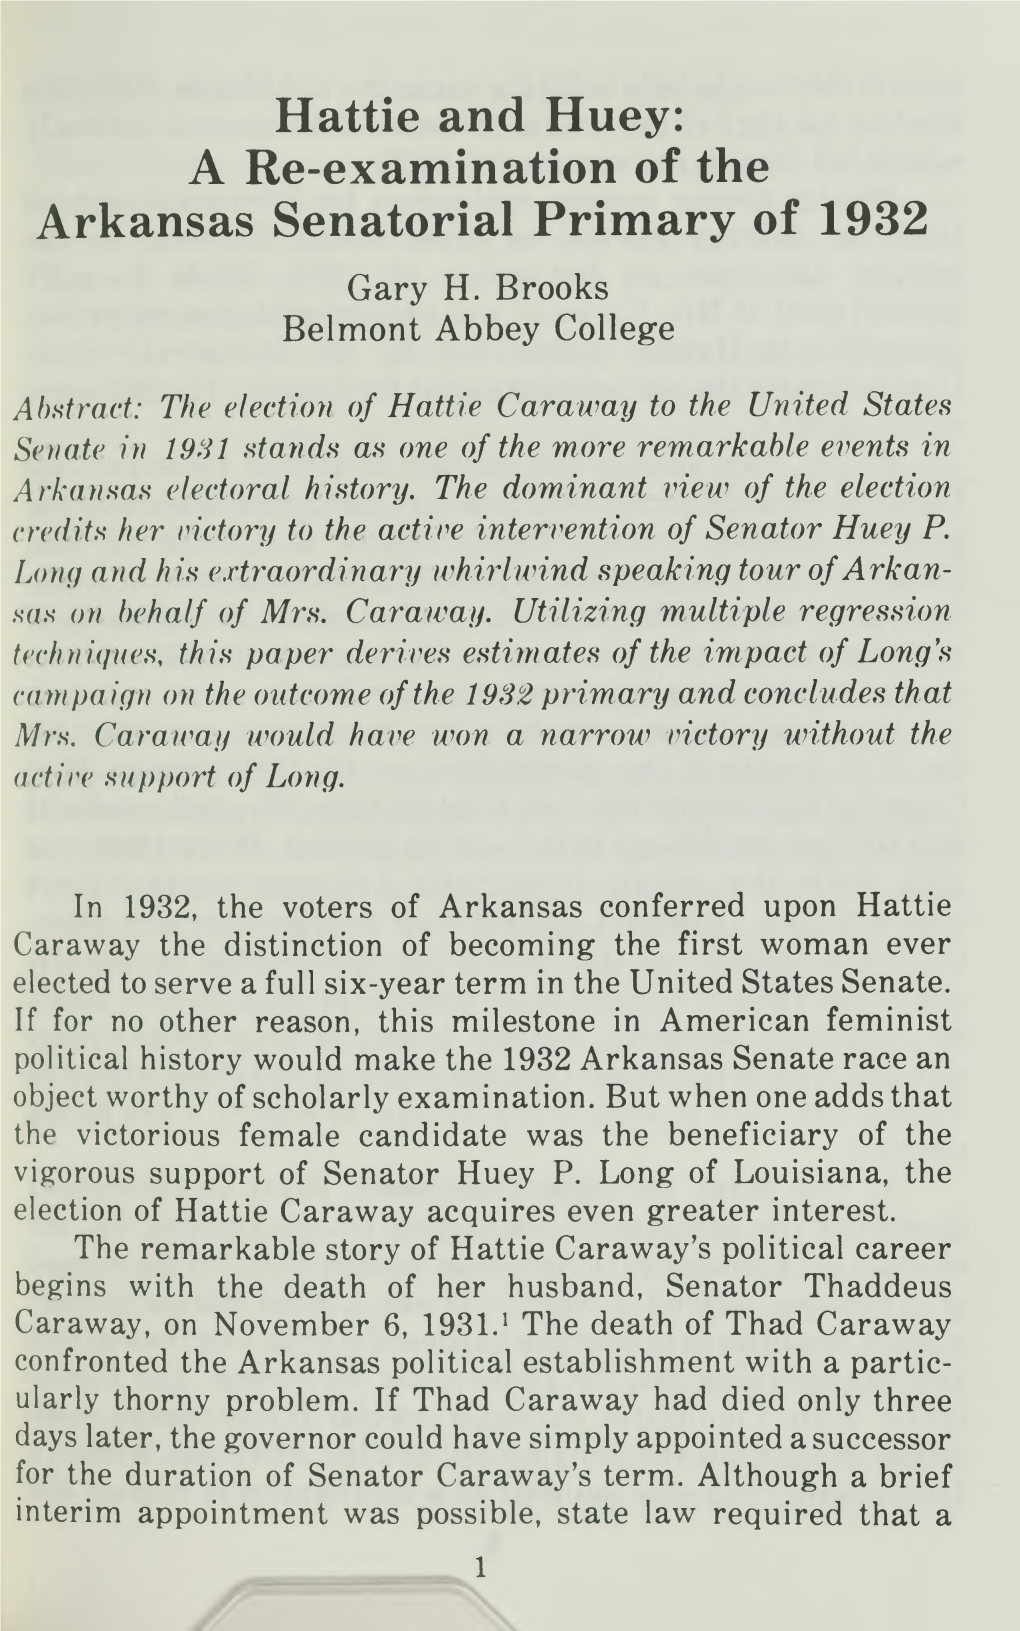 Hattie and Huey: a Re-Examination of the Arkansas Senatorial Primary of 1932 Gary H